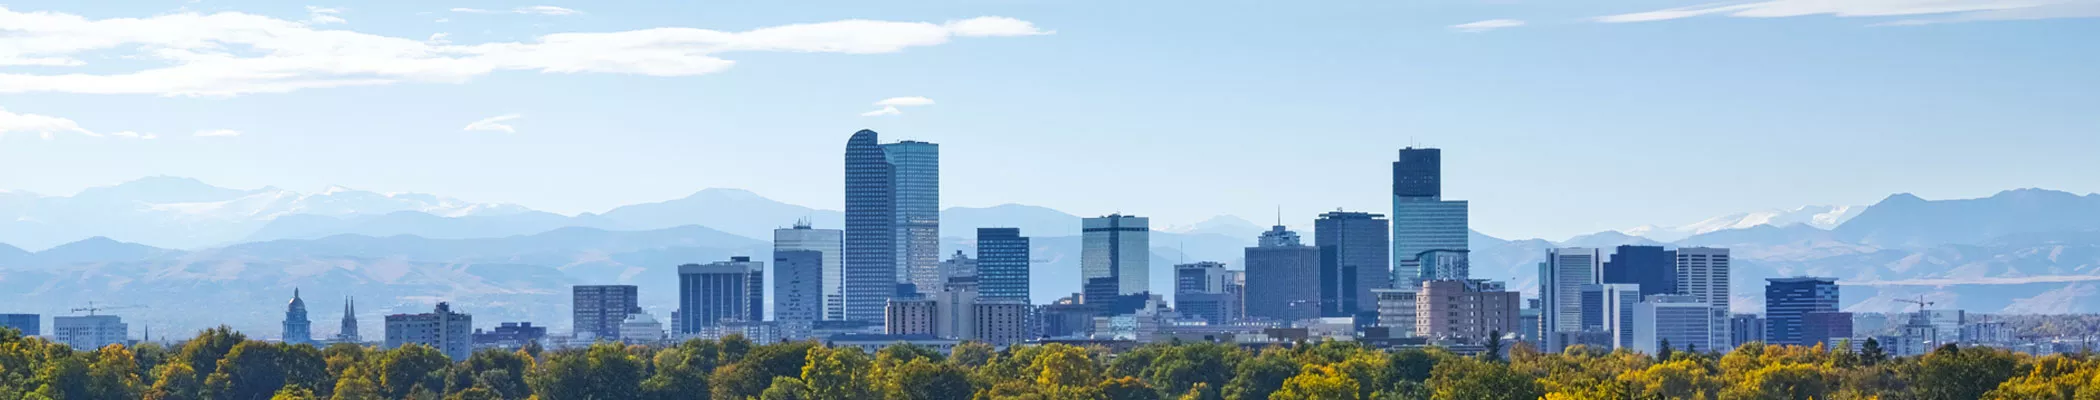 Denver city skyline on a sunny, cloudy day.